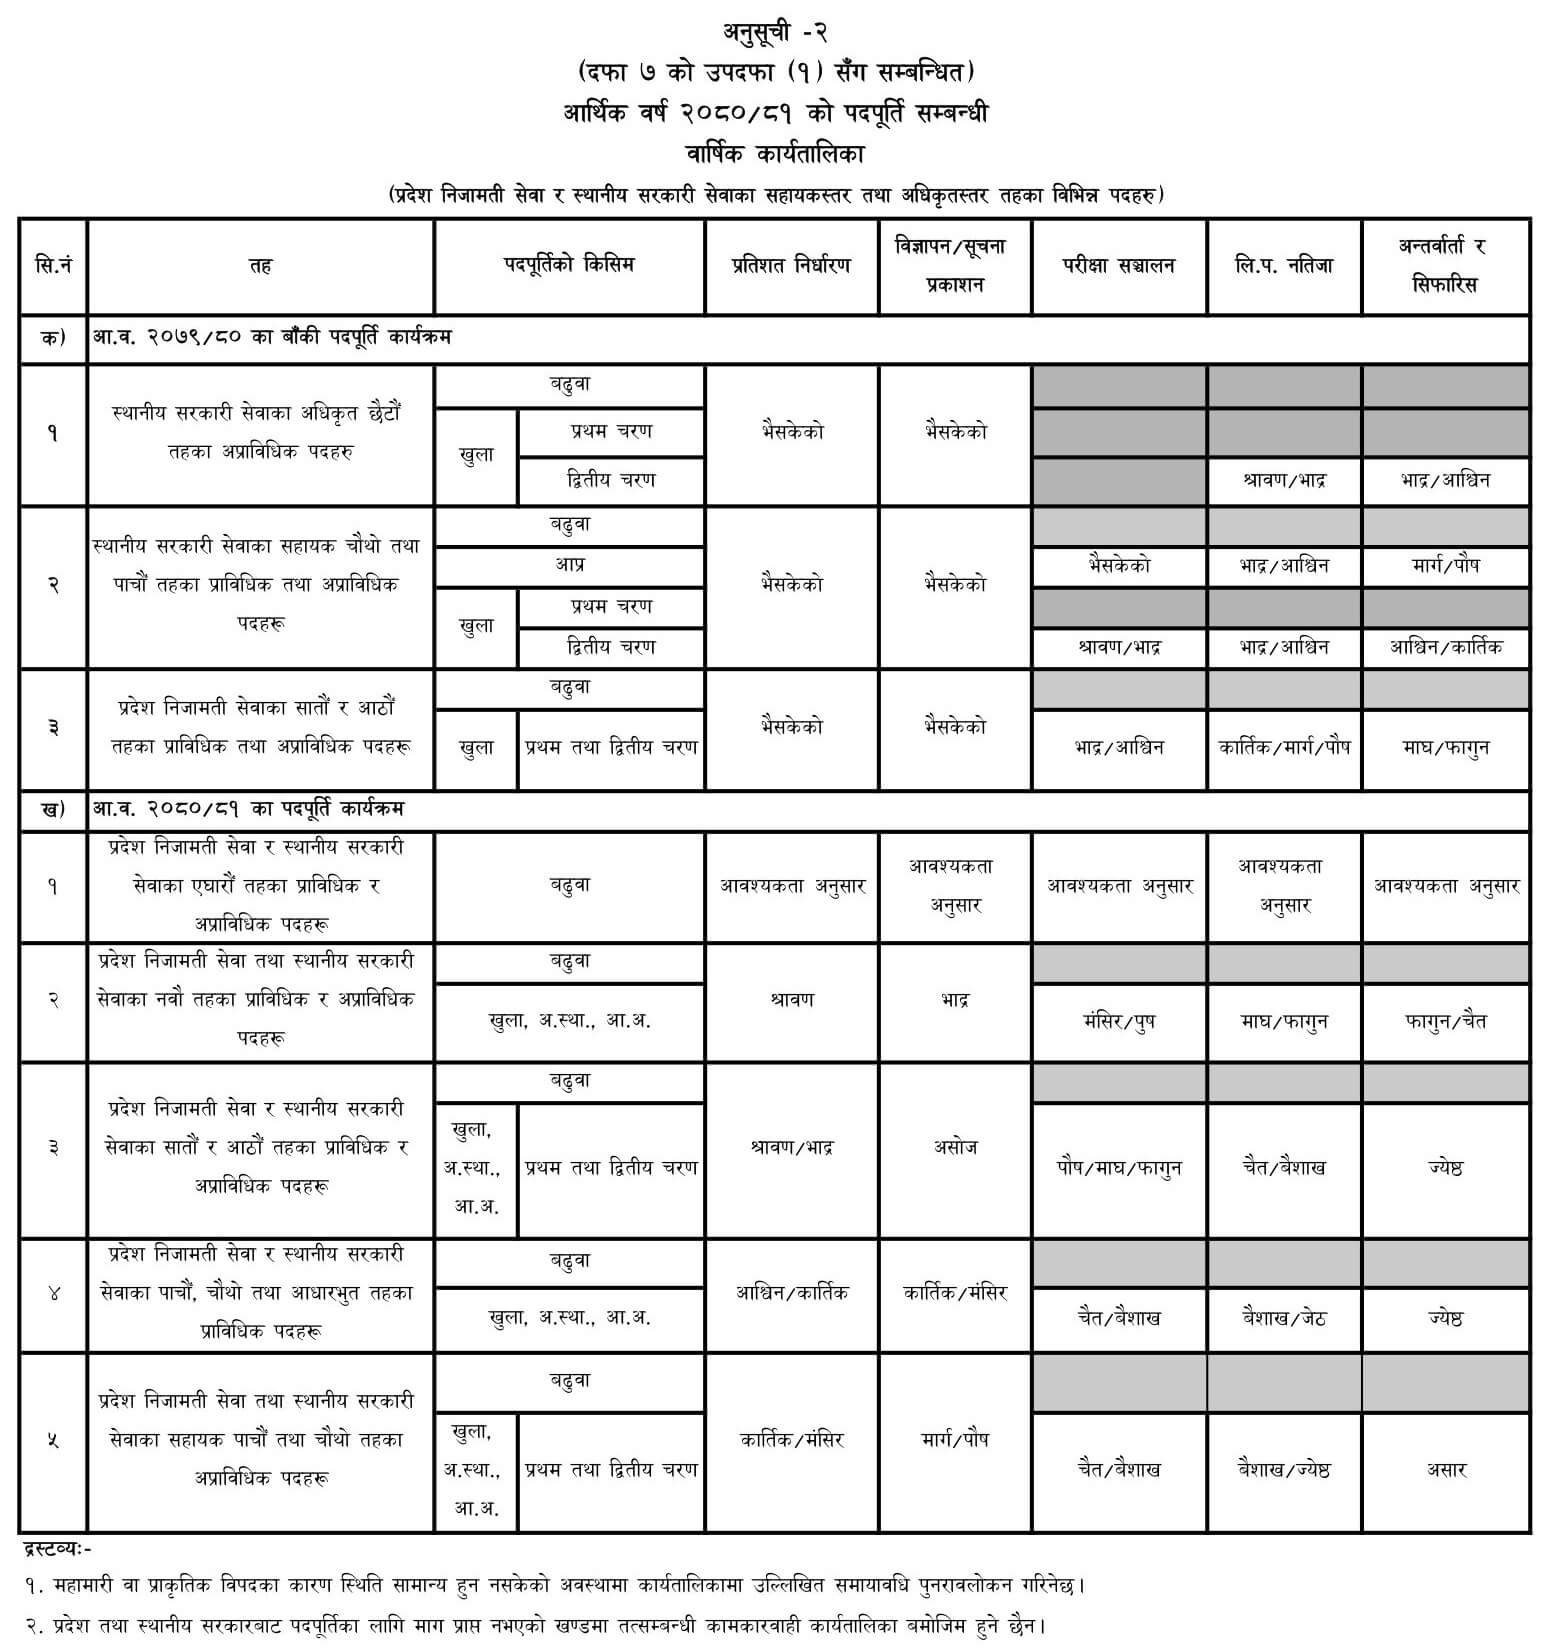 Koshi Pradesh Lok Sewa Aayog Vacancy Calendar 2080 / 2081